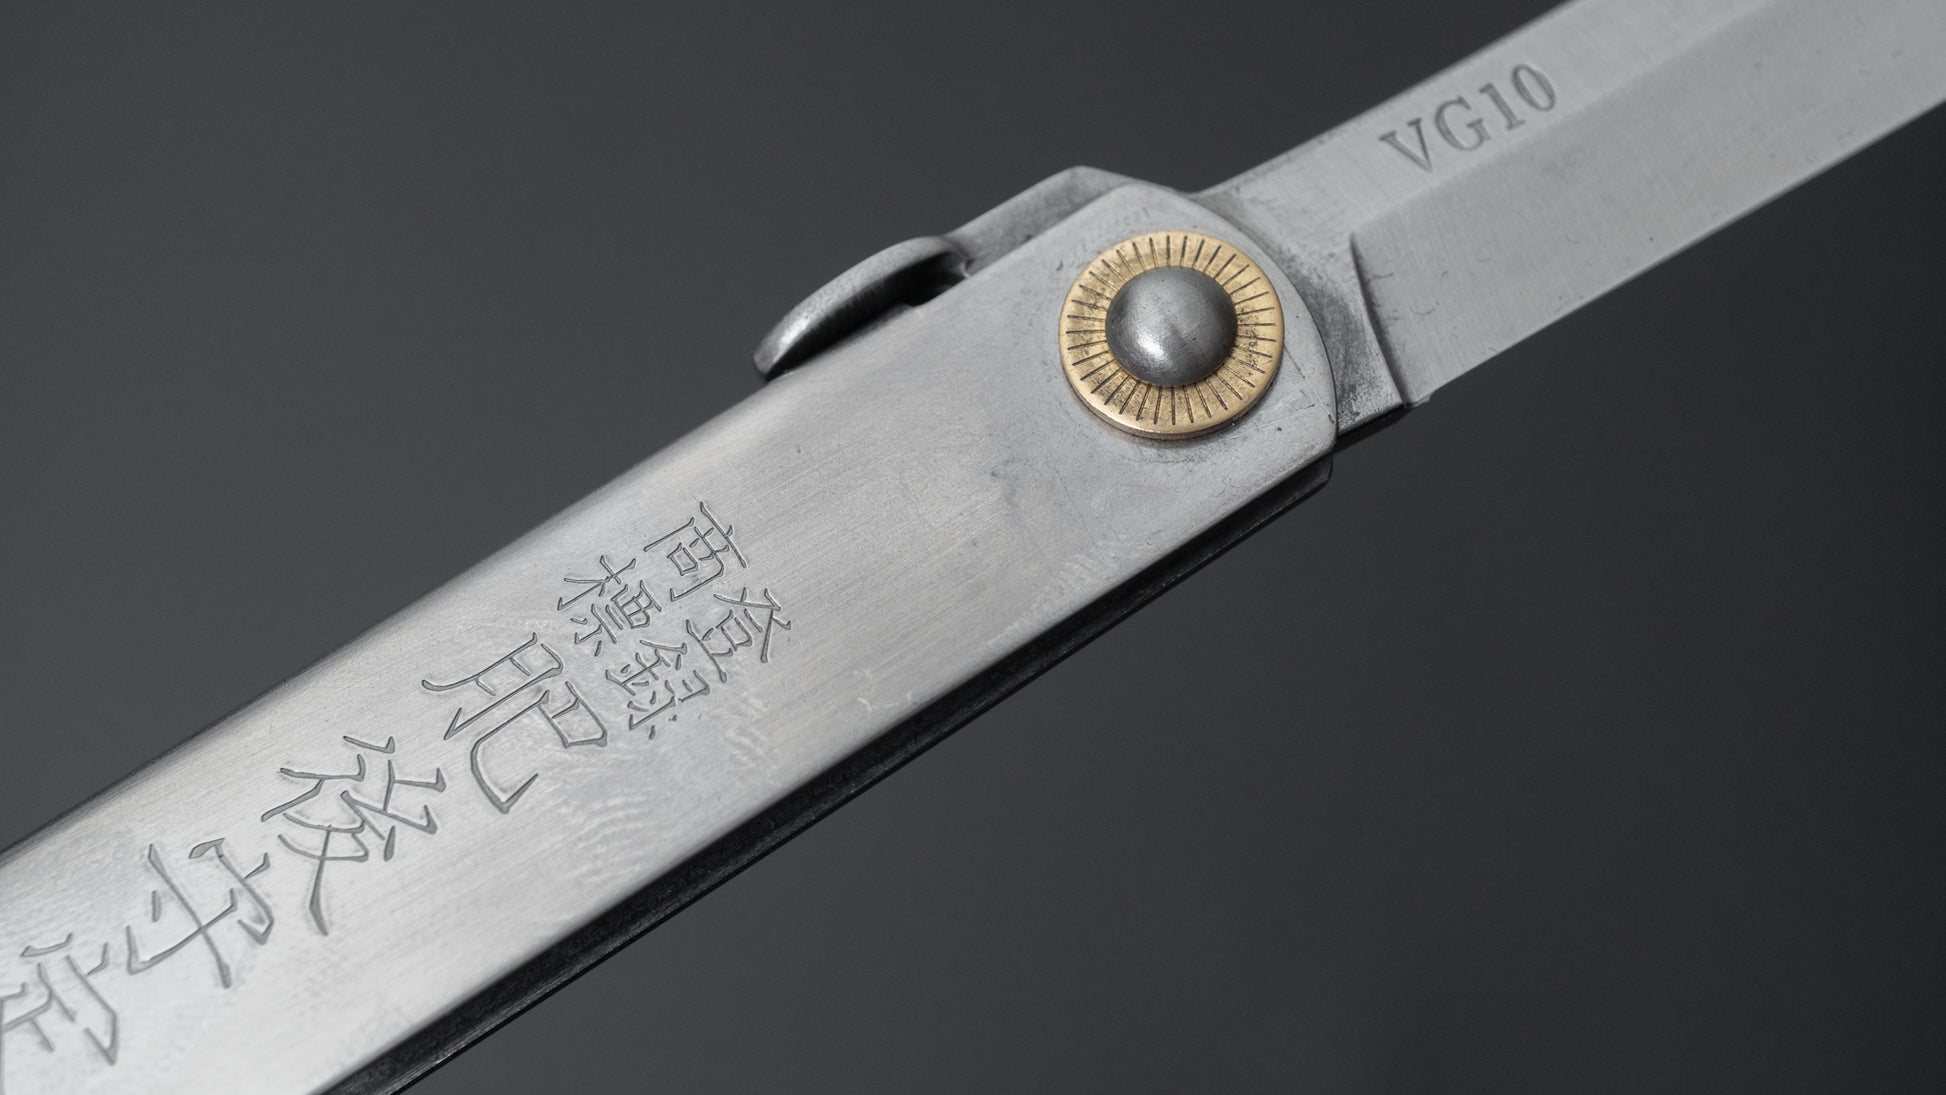 Higonokami VG10 Folding Knife Large Stainless Handle - HITOHIRA